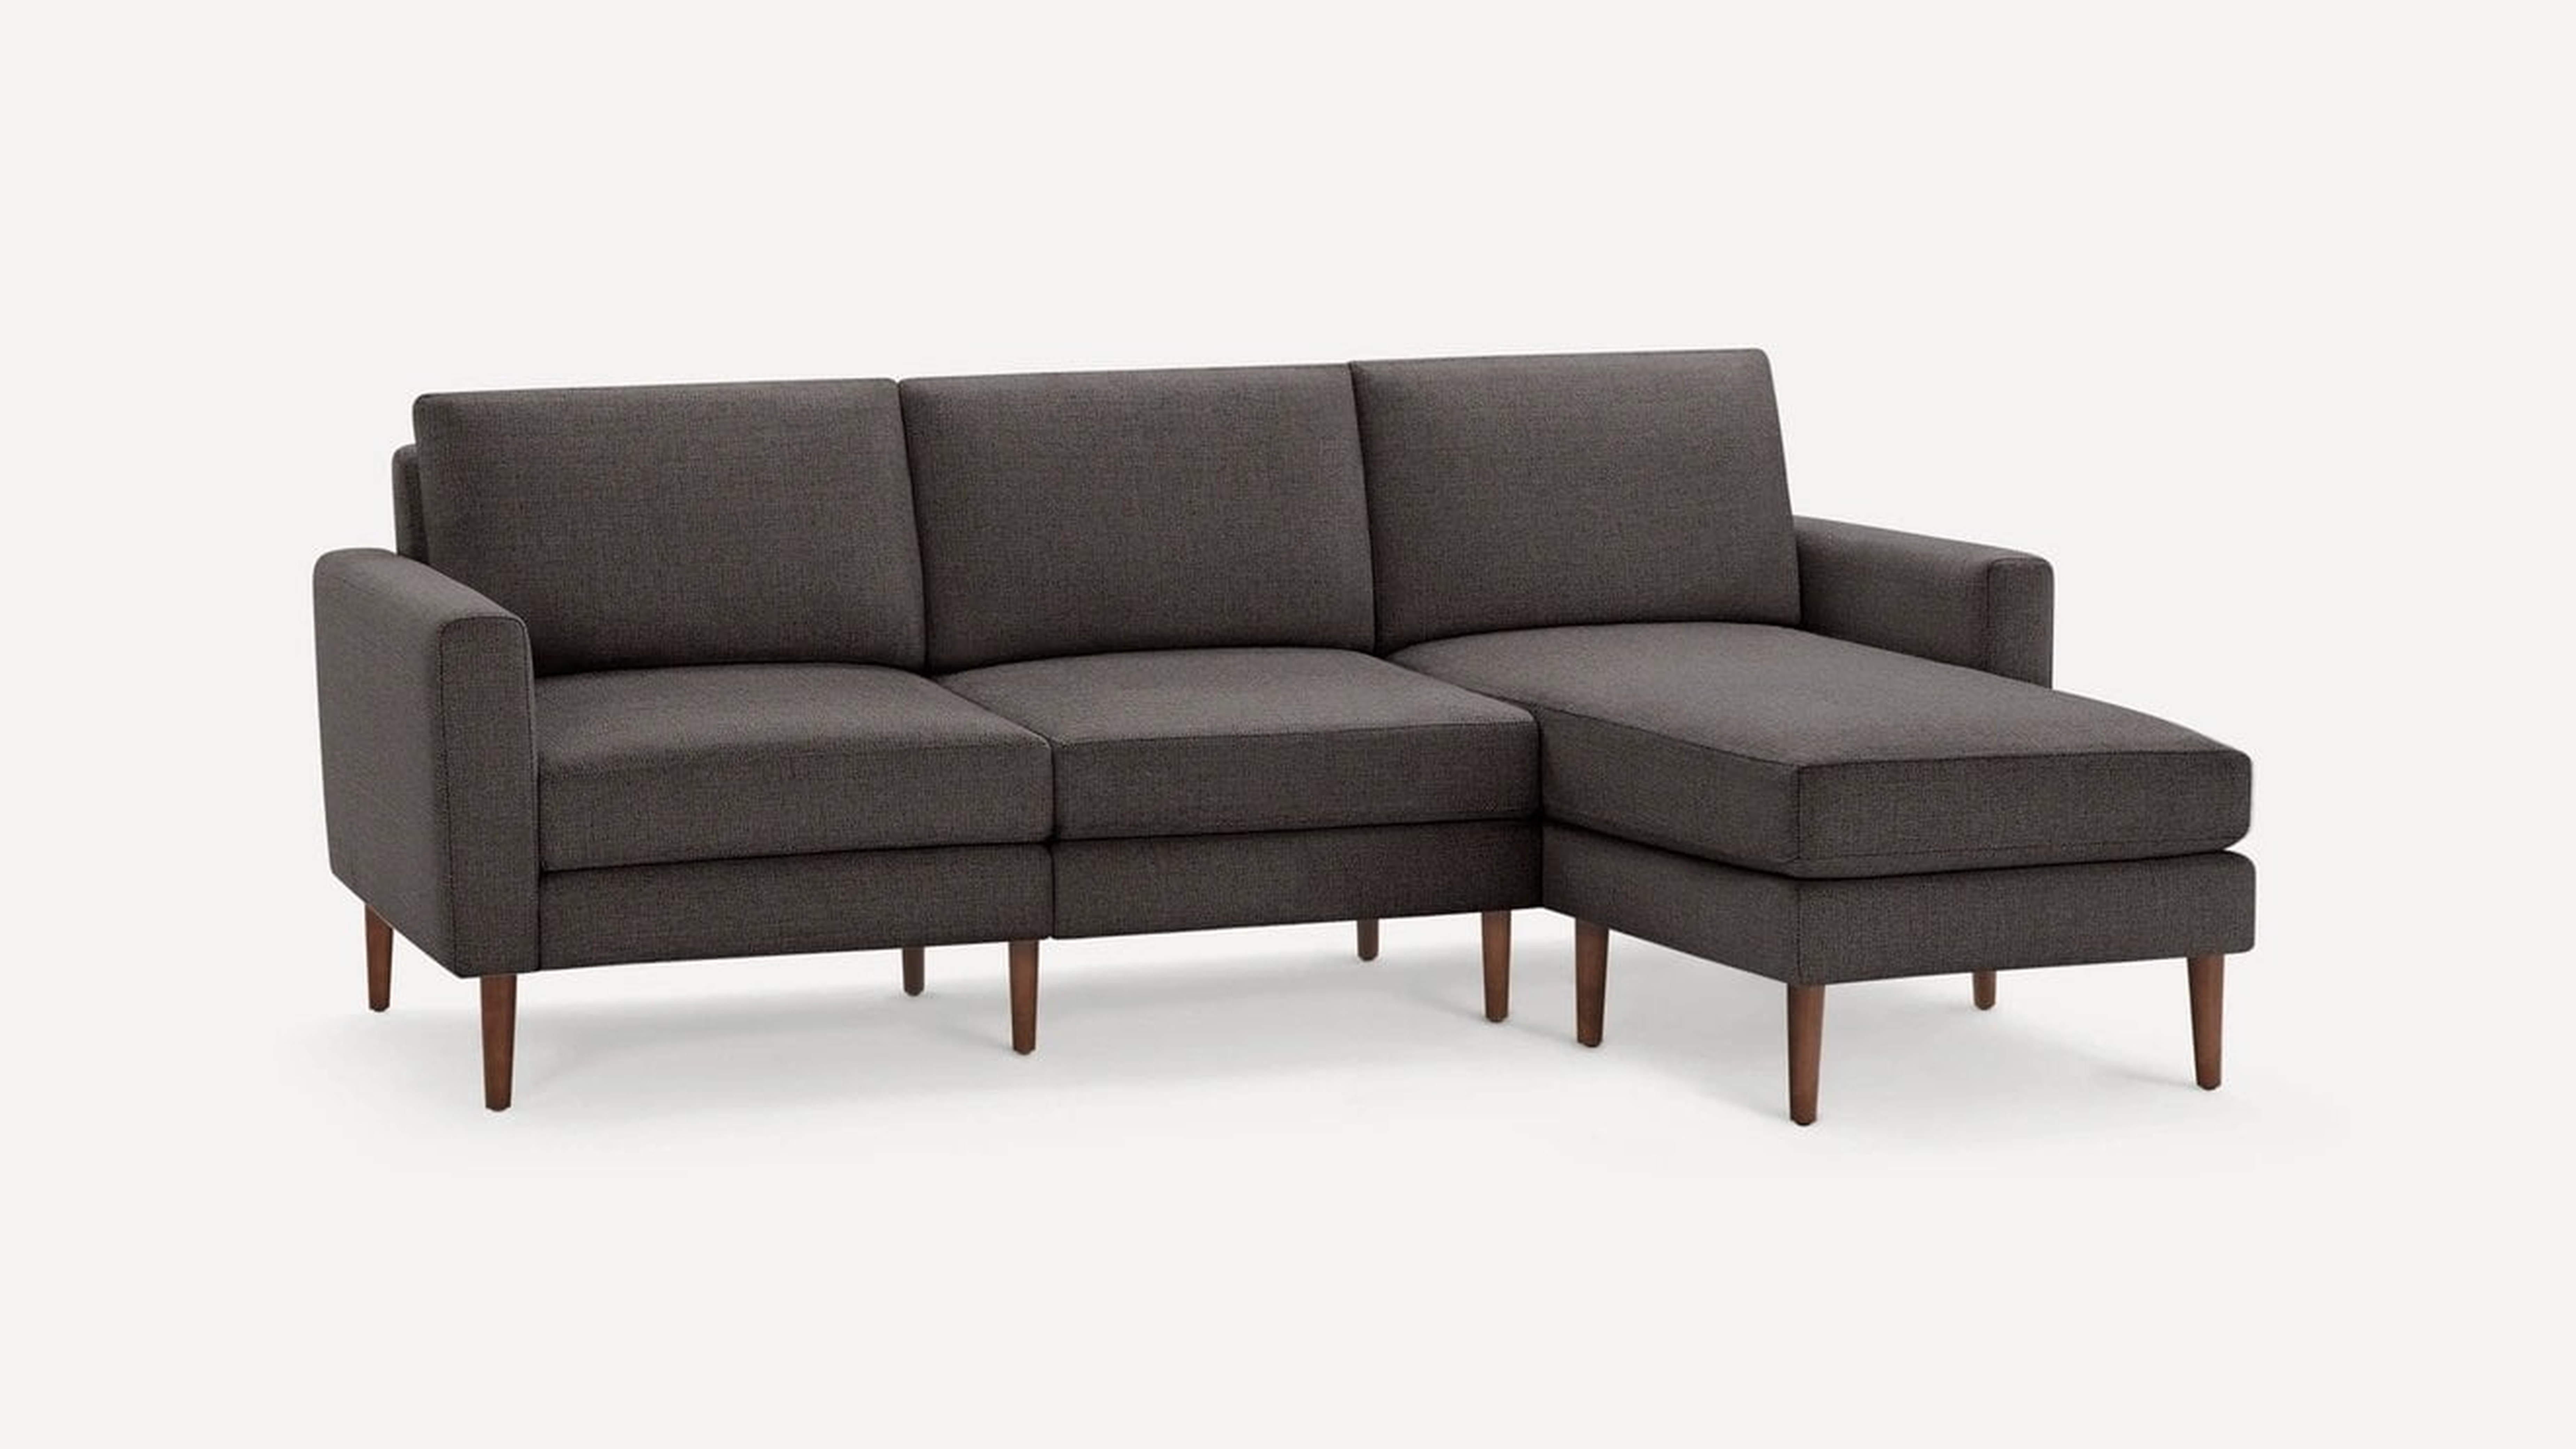 Nomad Sofa Sectional in Charcoal, Walnut Legs, Leg Finish: WalnutLegs - Burrow